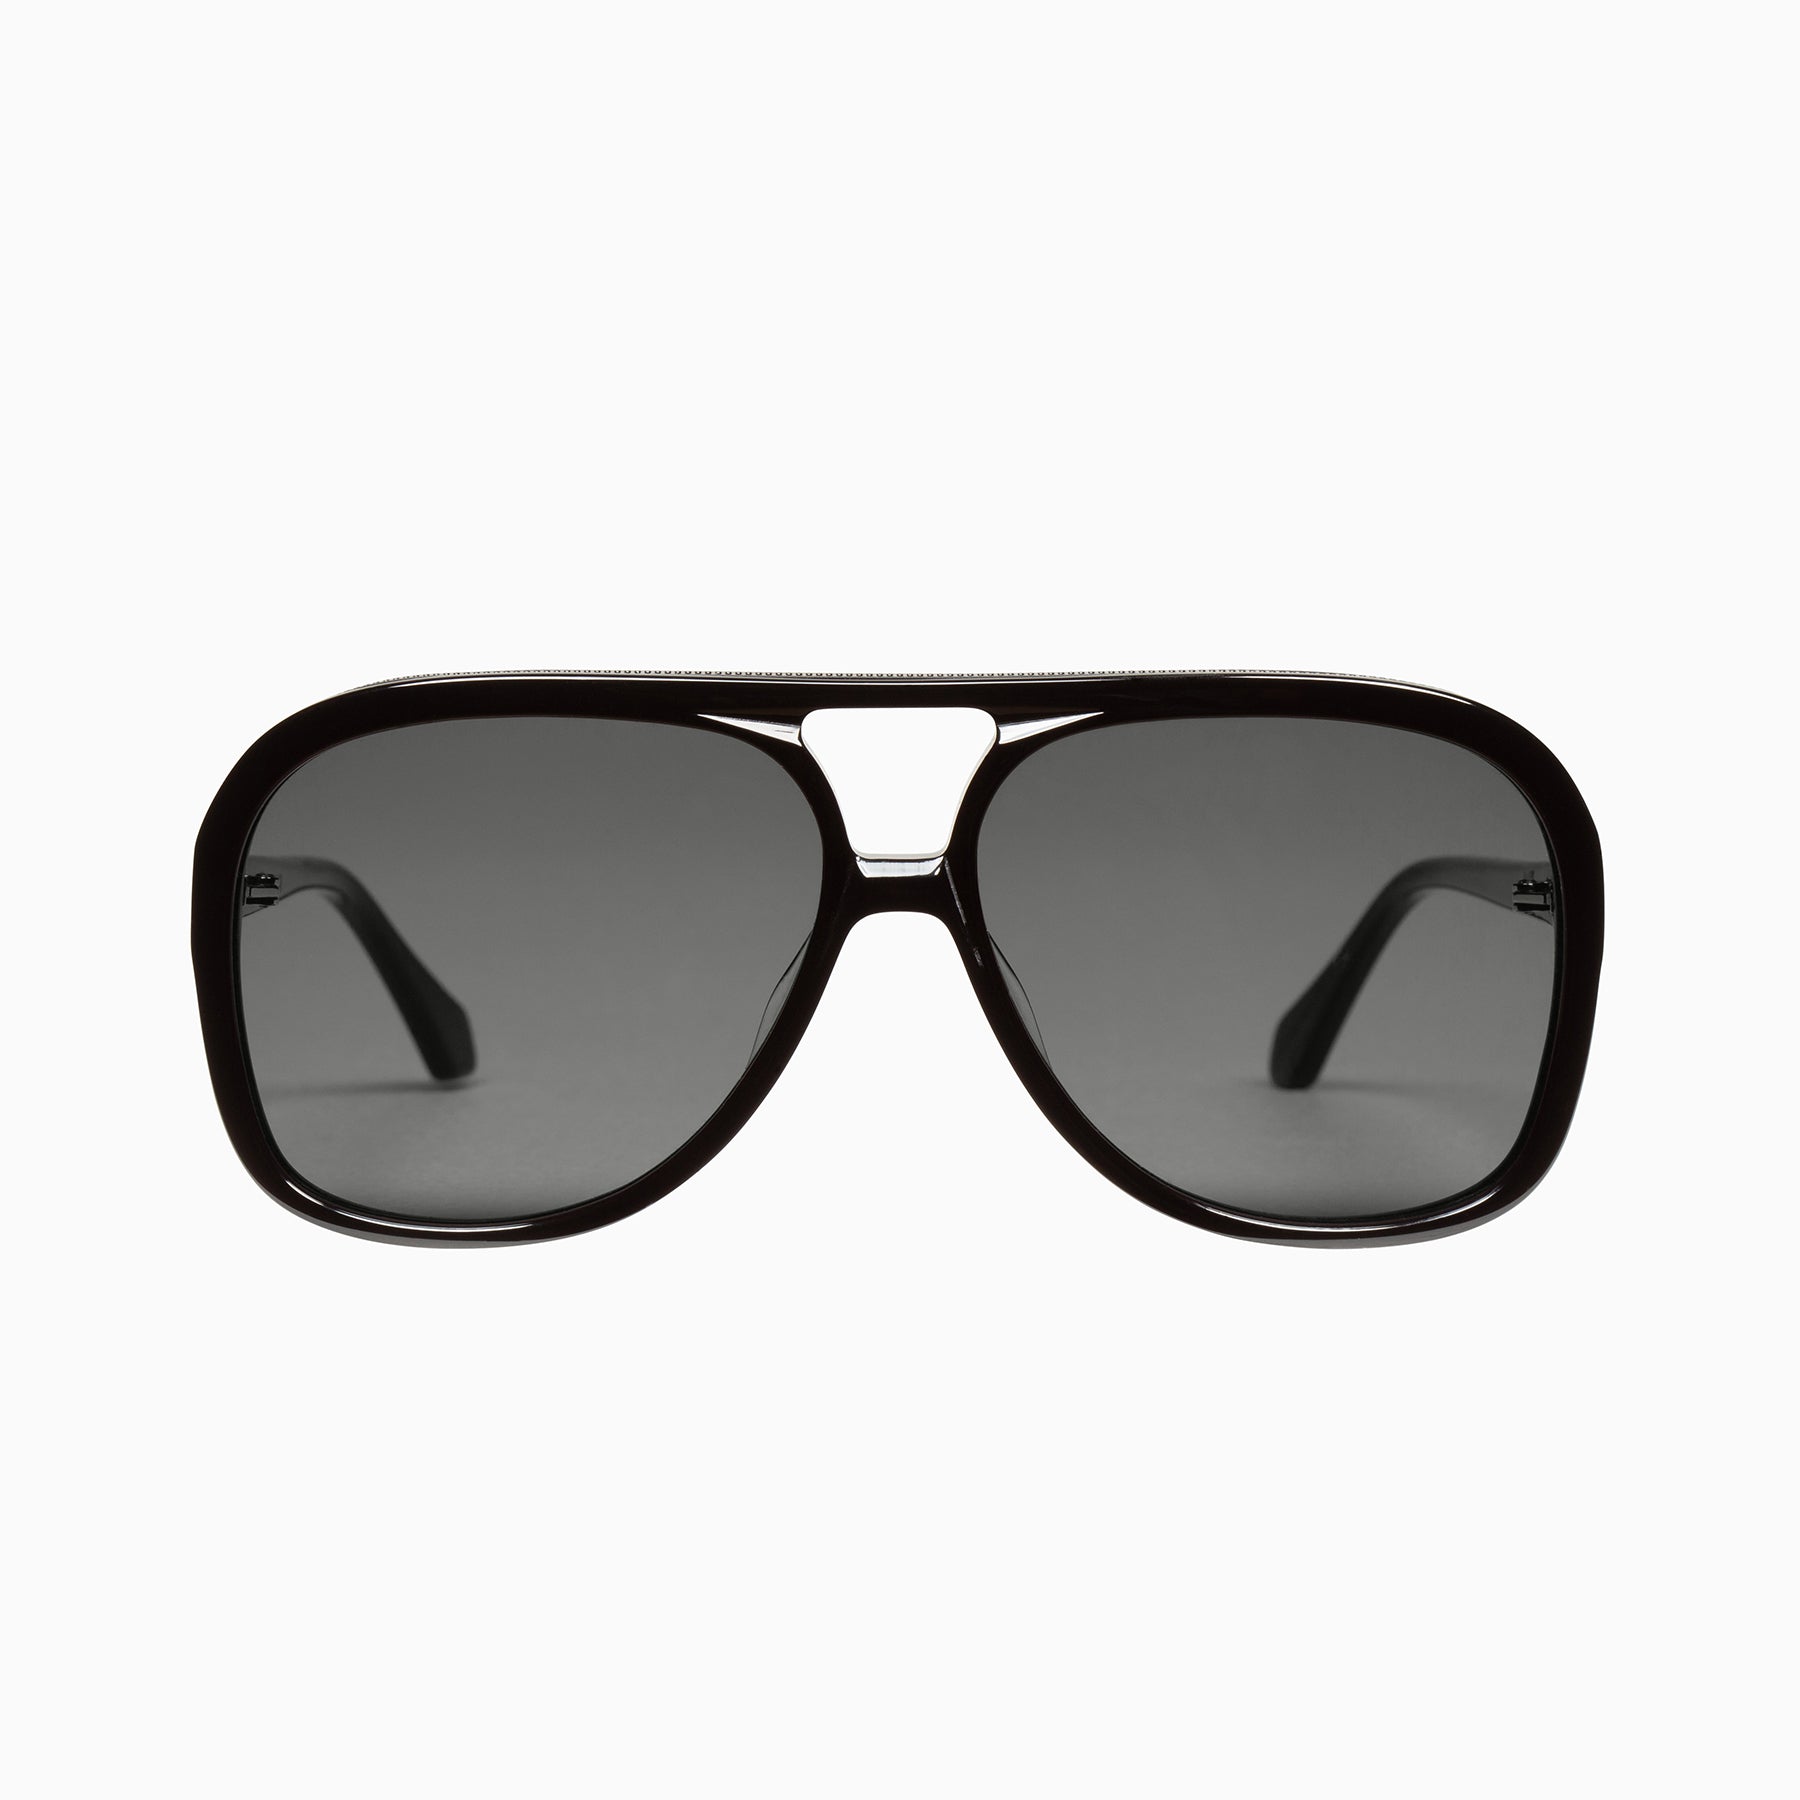 Buy 1980s Oversized Aviator Glasses Eighties Black Aviator Eyeglasses  Oversized Mens Aviator Sunglasses Brushed Black Metallic Optical Online in  India - Etsy